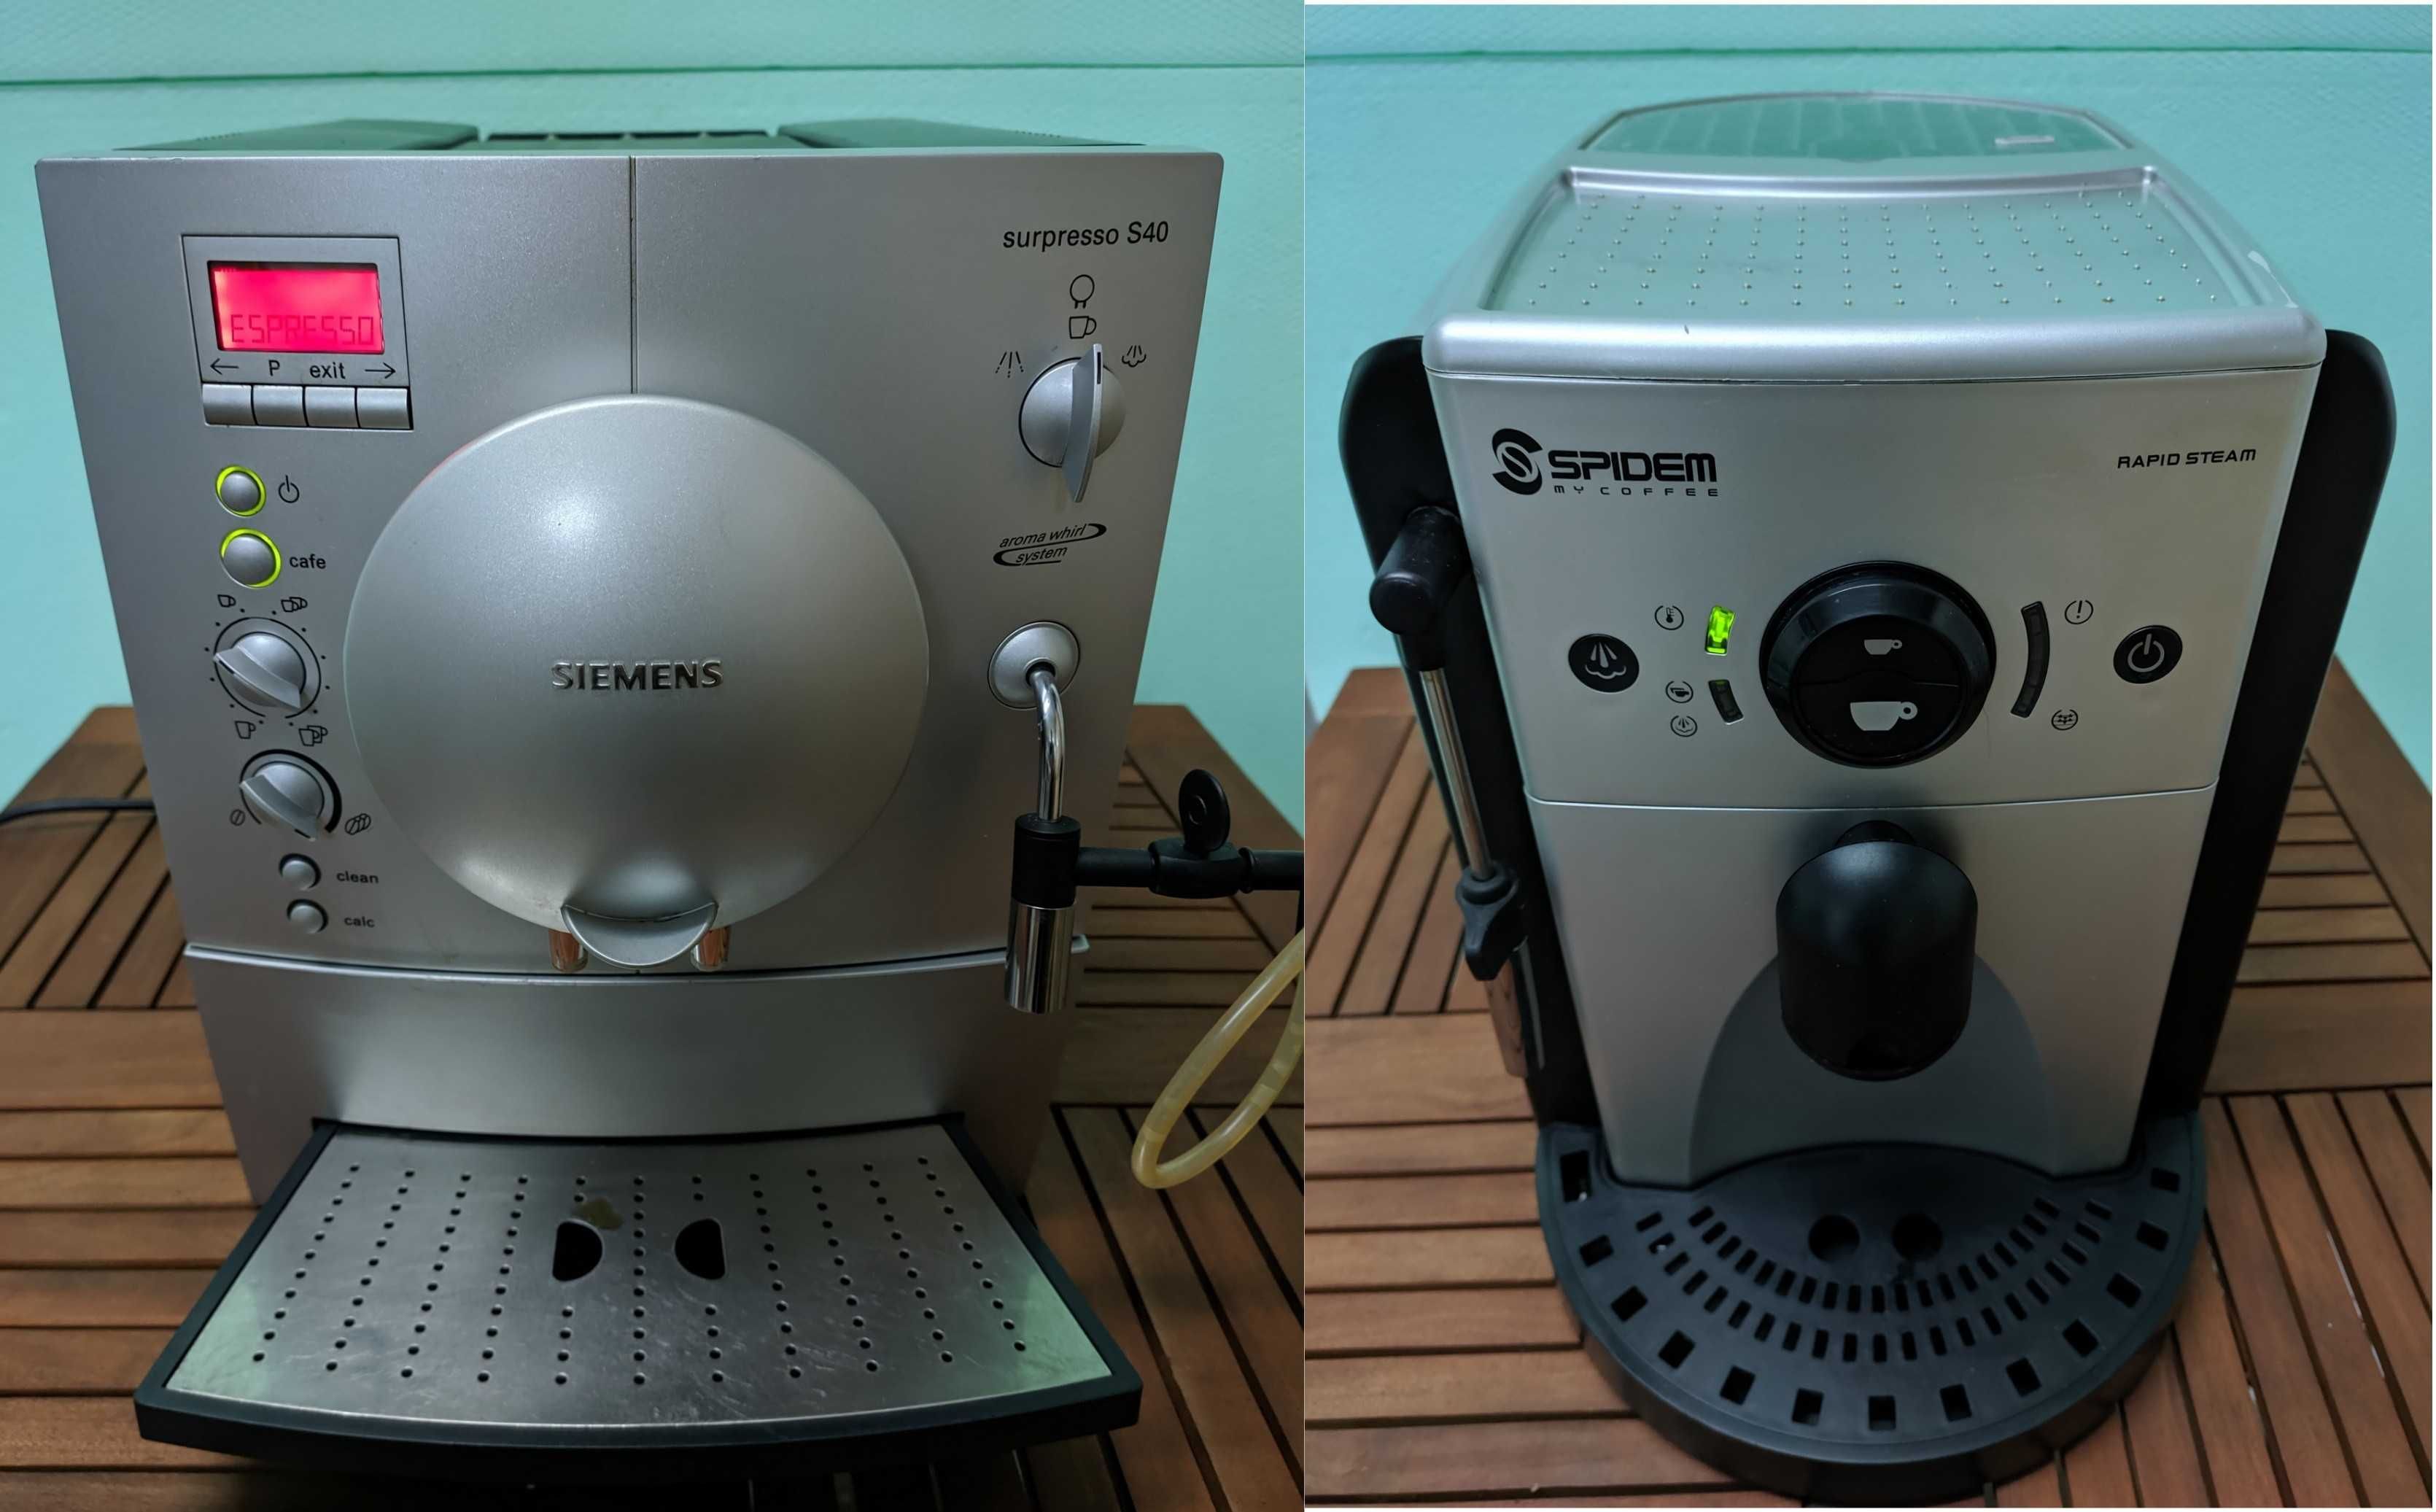 Кафемашина кафе автомат робот Siemens, Spidem